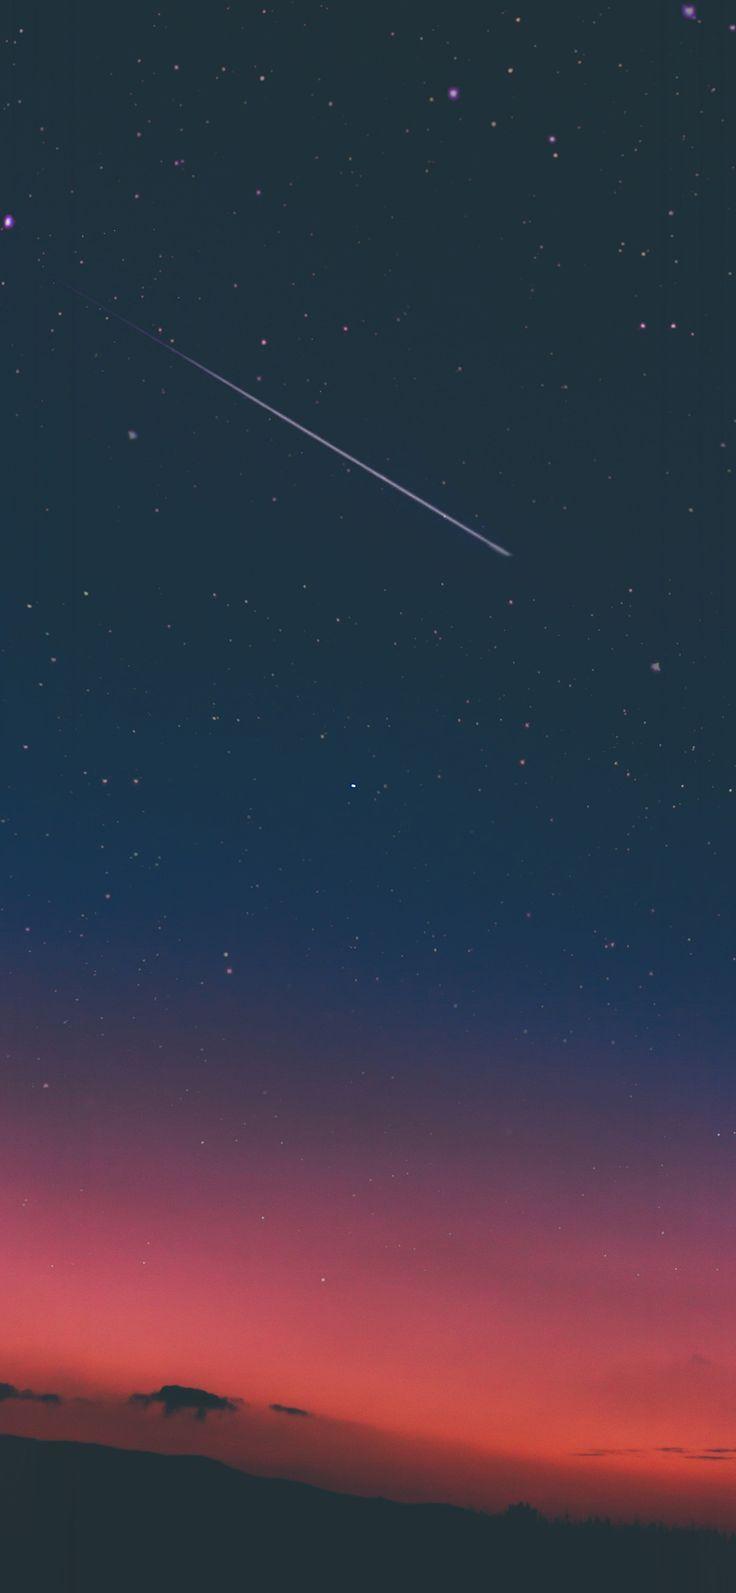 iPhone X Wallpaper, sky sunset night blue nature